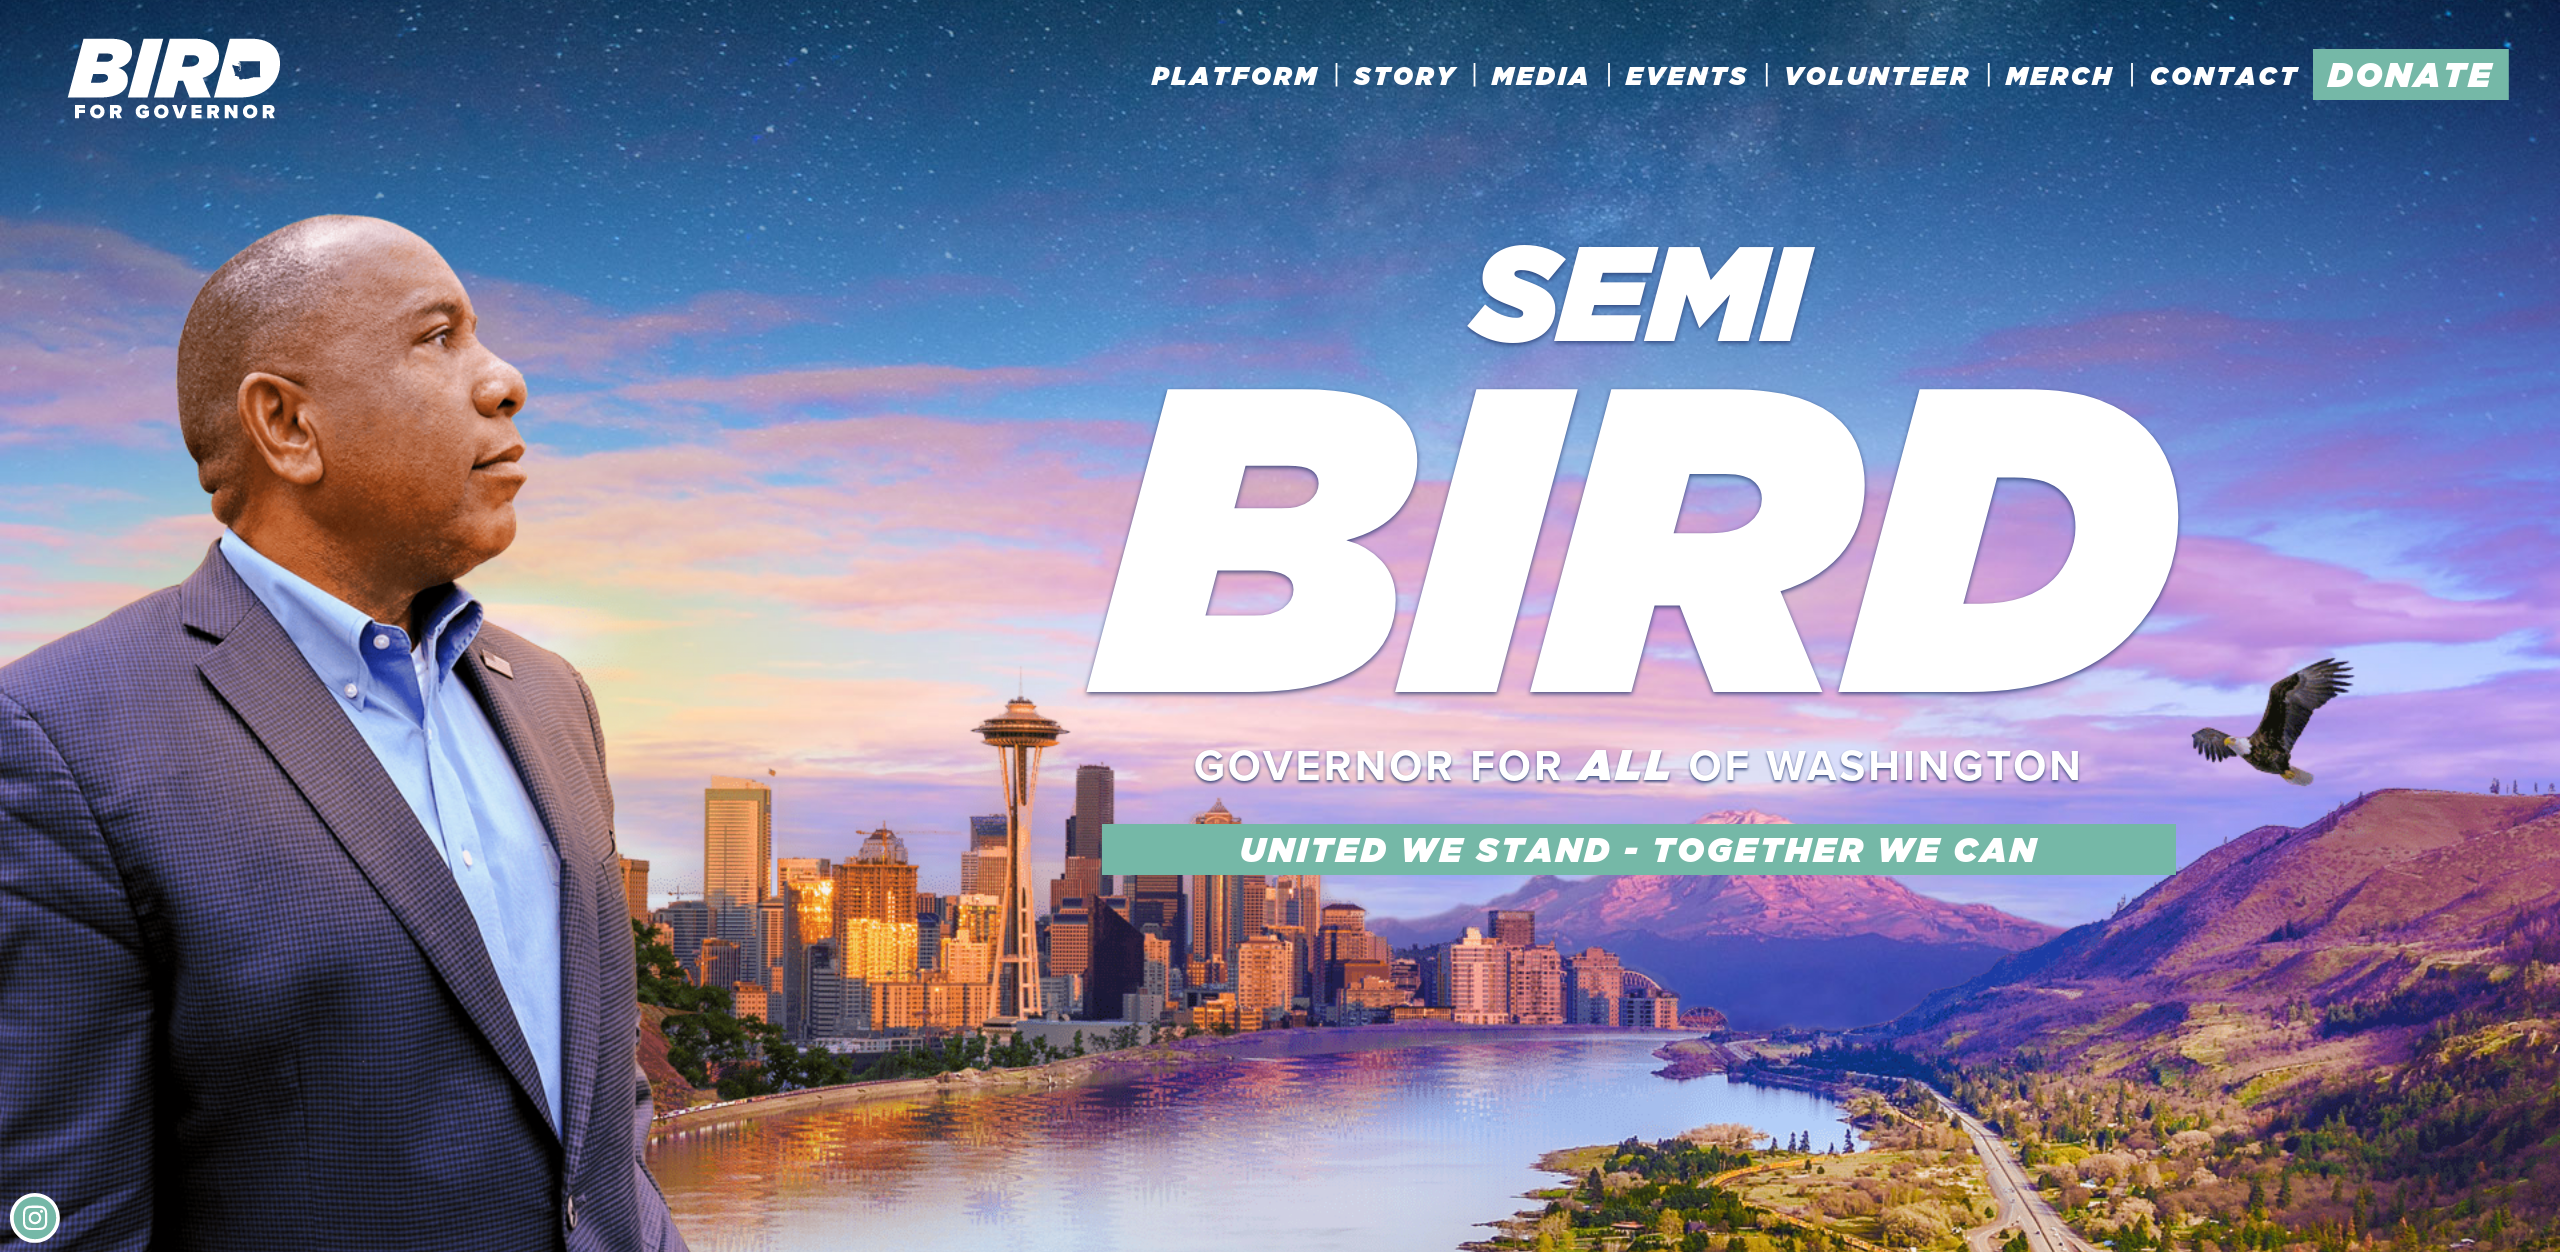 Screenshot of Semi Bird's campaign website